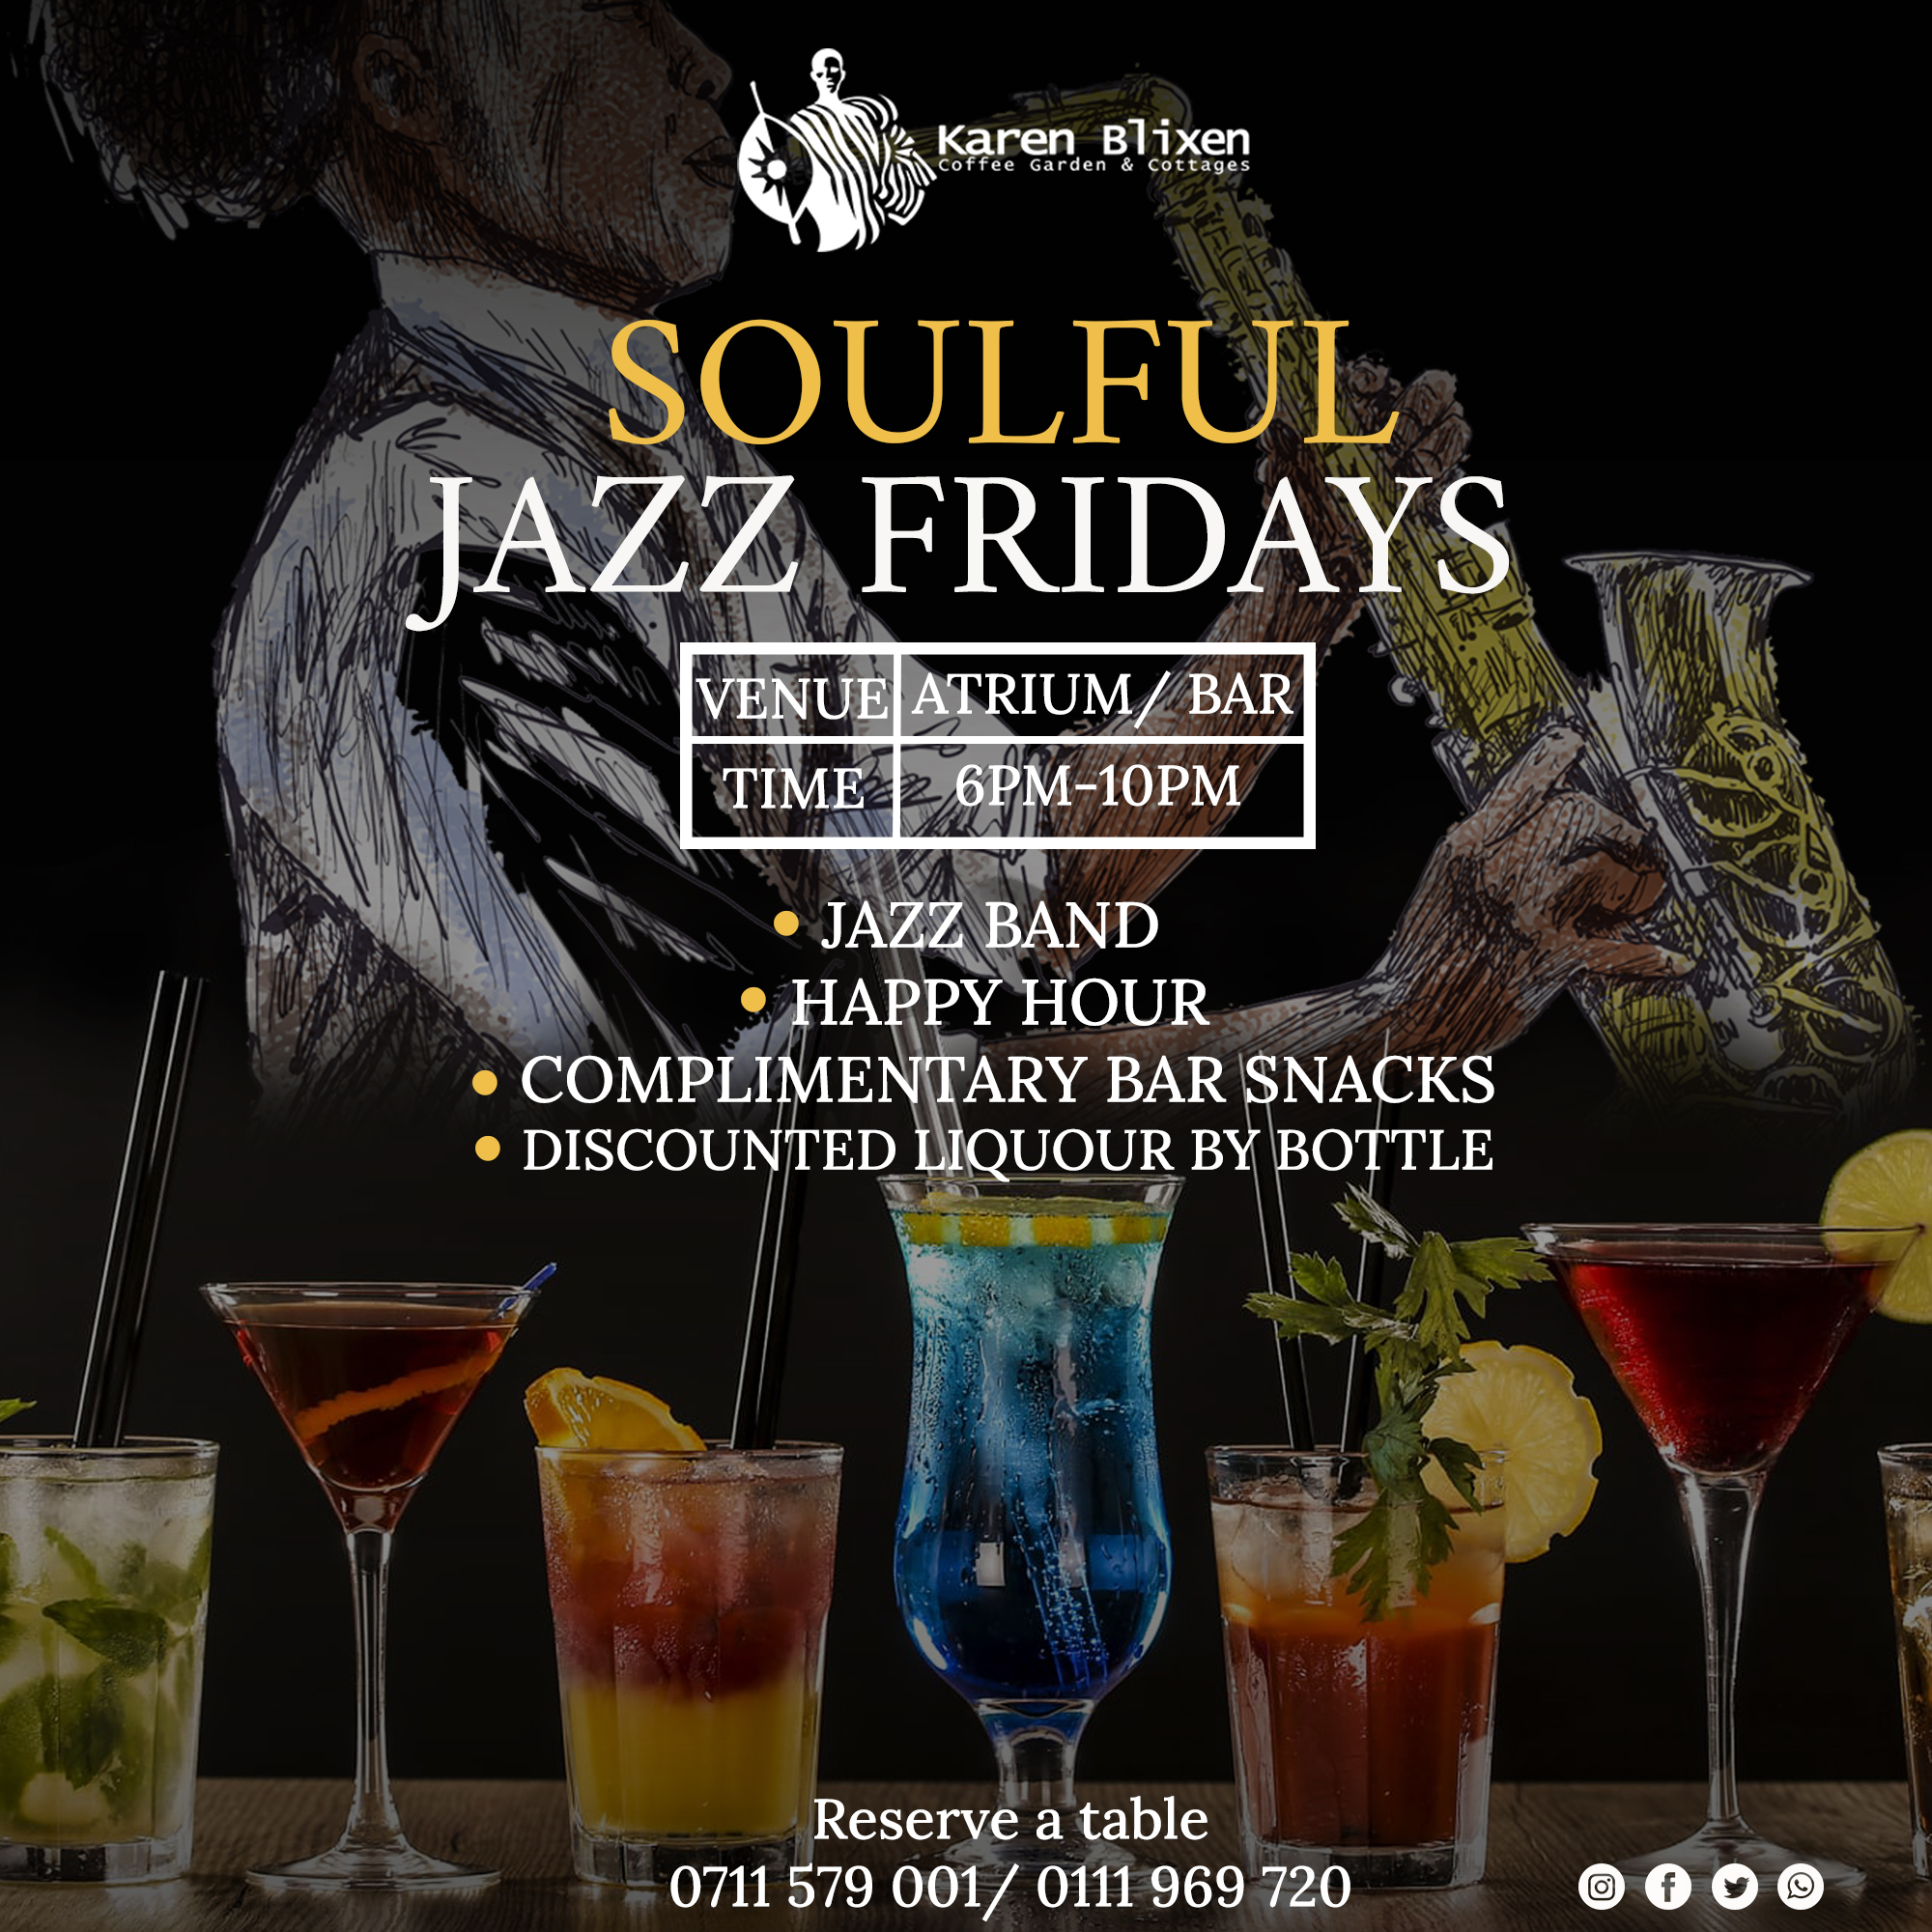 Soulfull Jazz Fridays